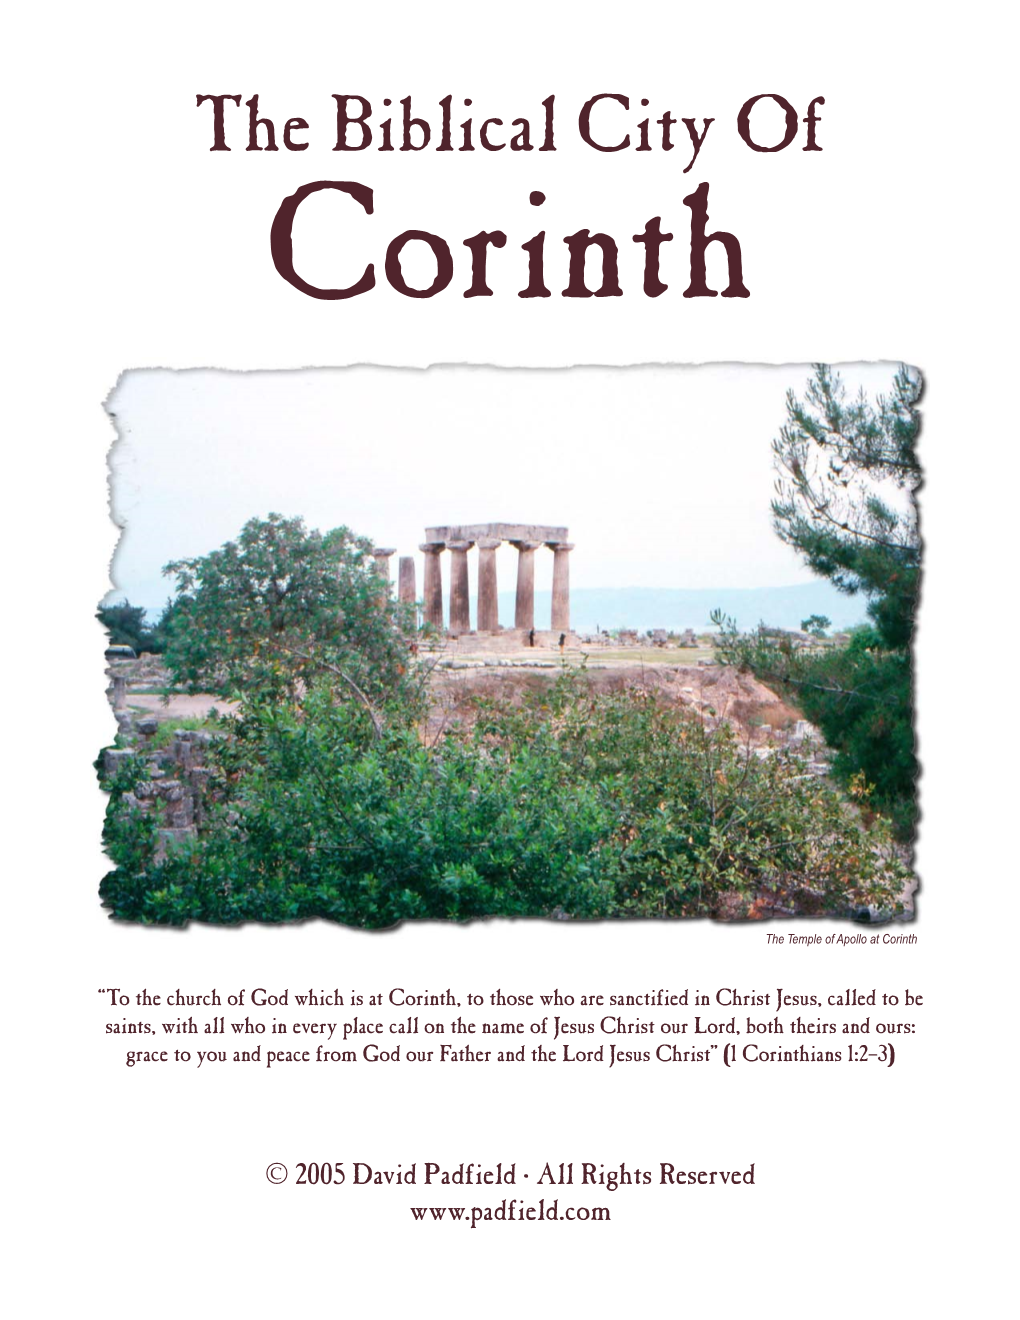 Biblical City of Corinth, Greece